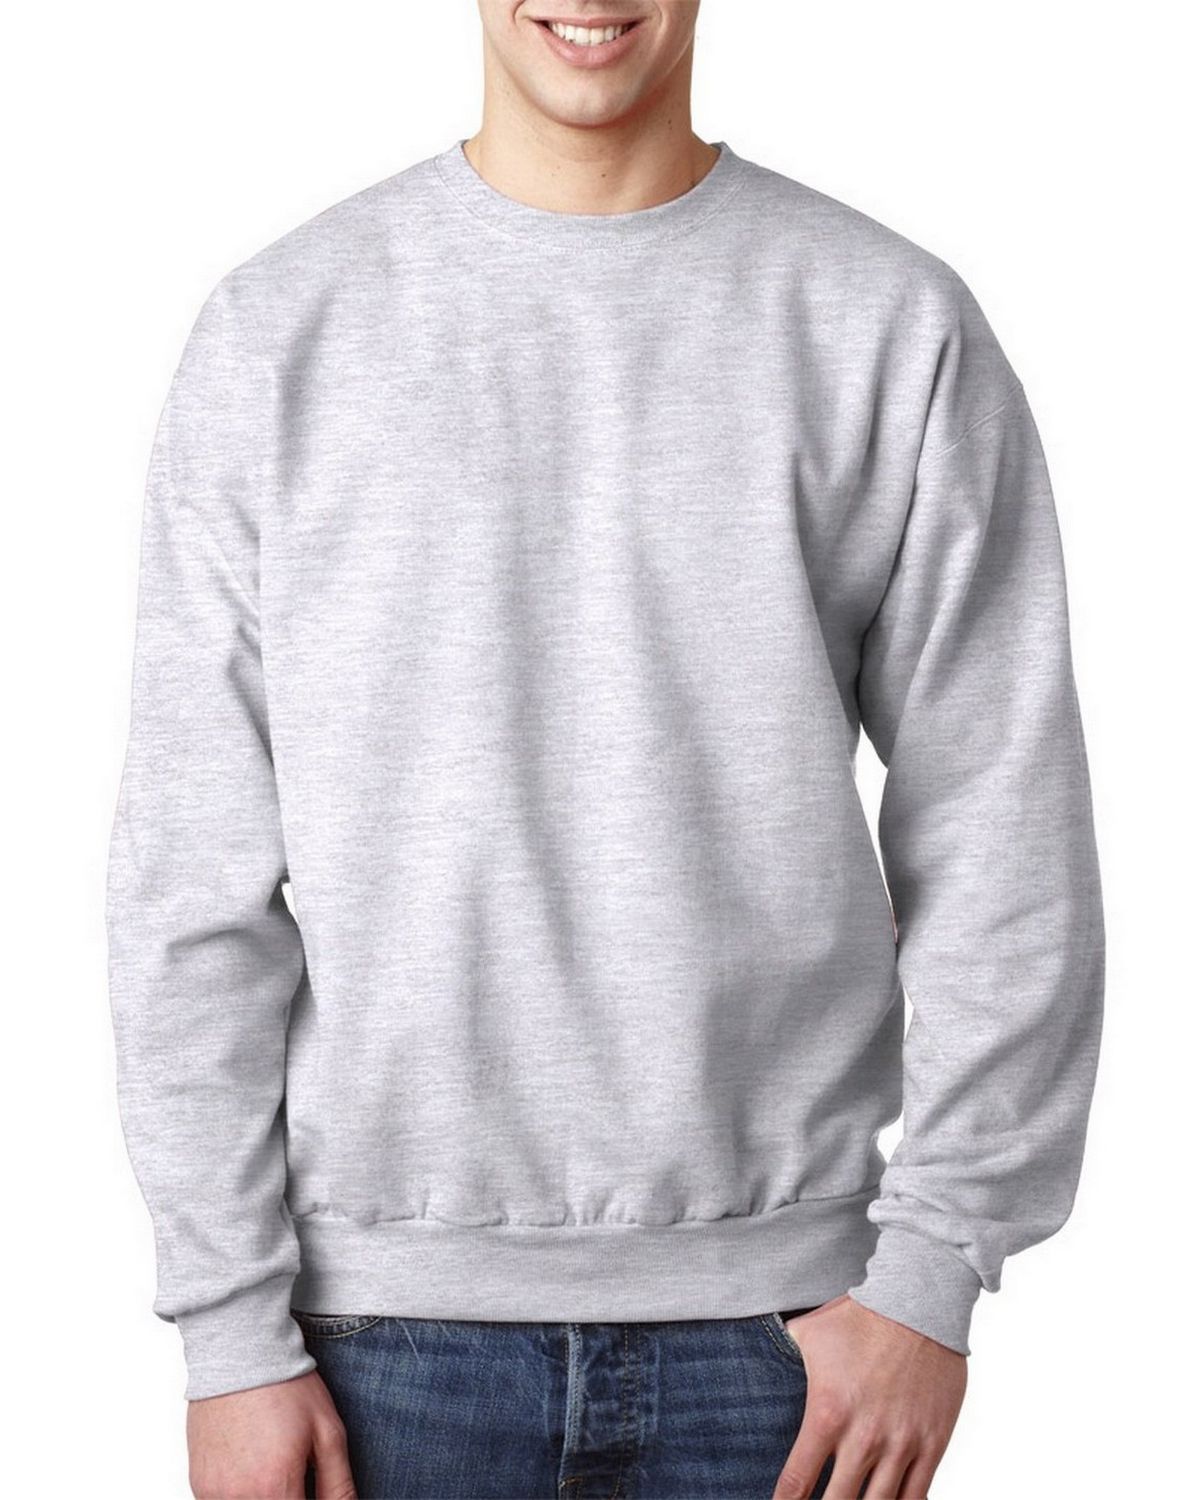 Hanes P160 Adult Sweatshirt - ApparelnBags.com